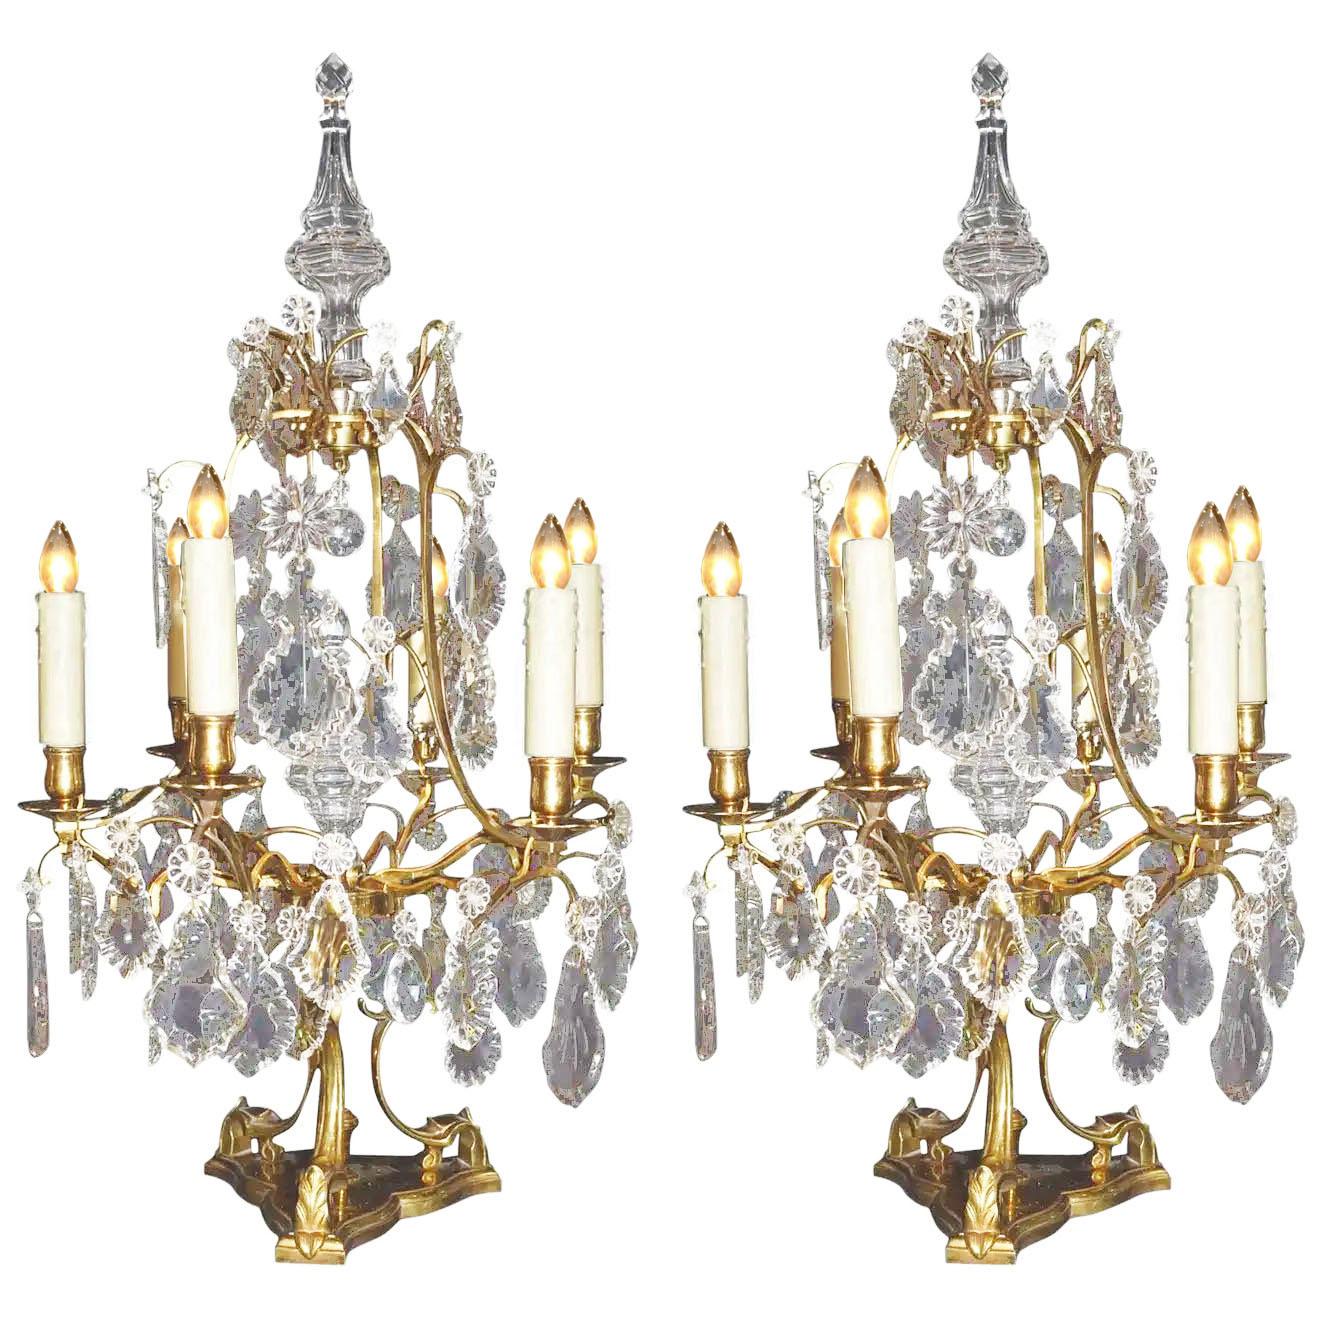 Pair of gilt bronze and crystal six-light girandoles.